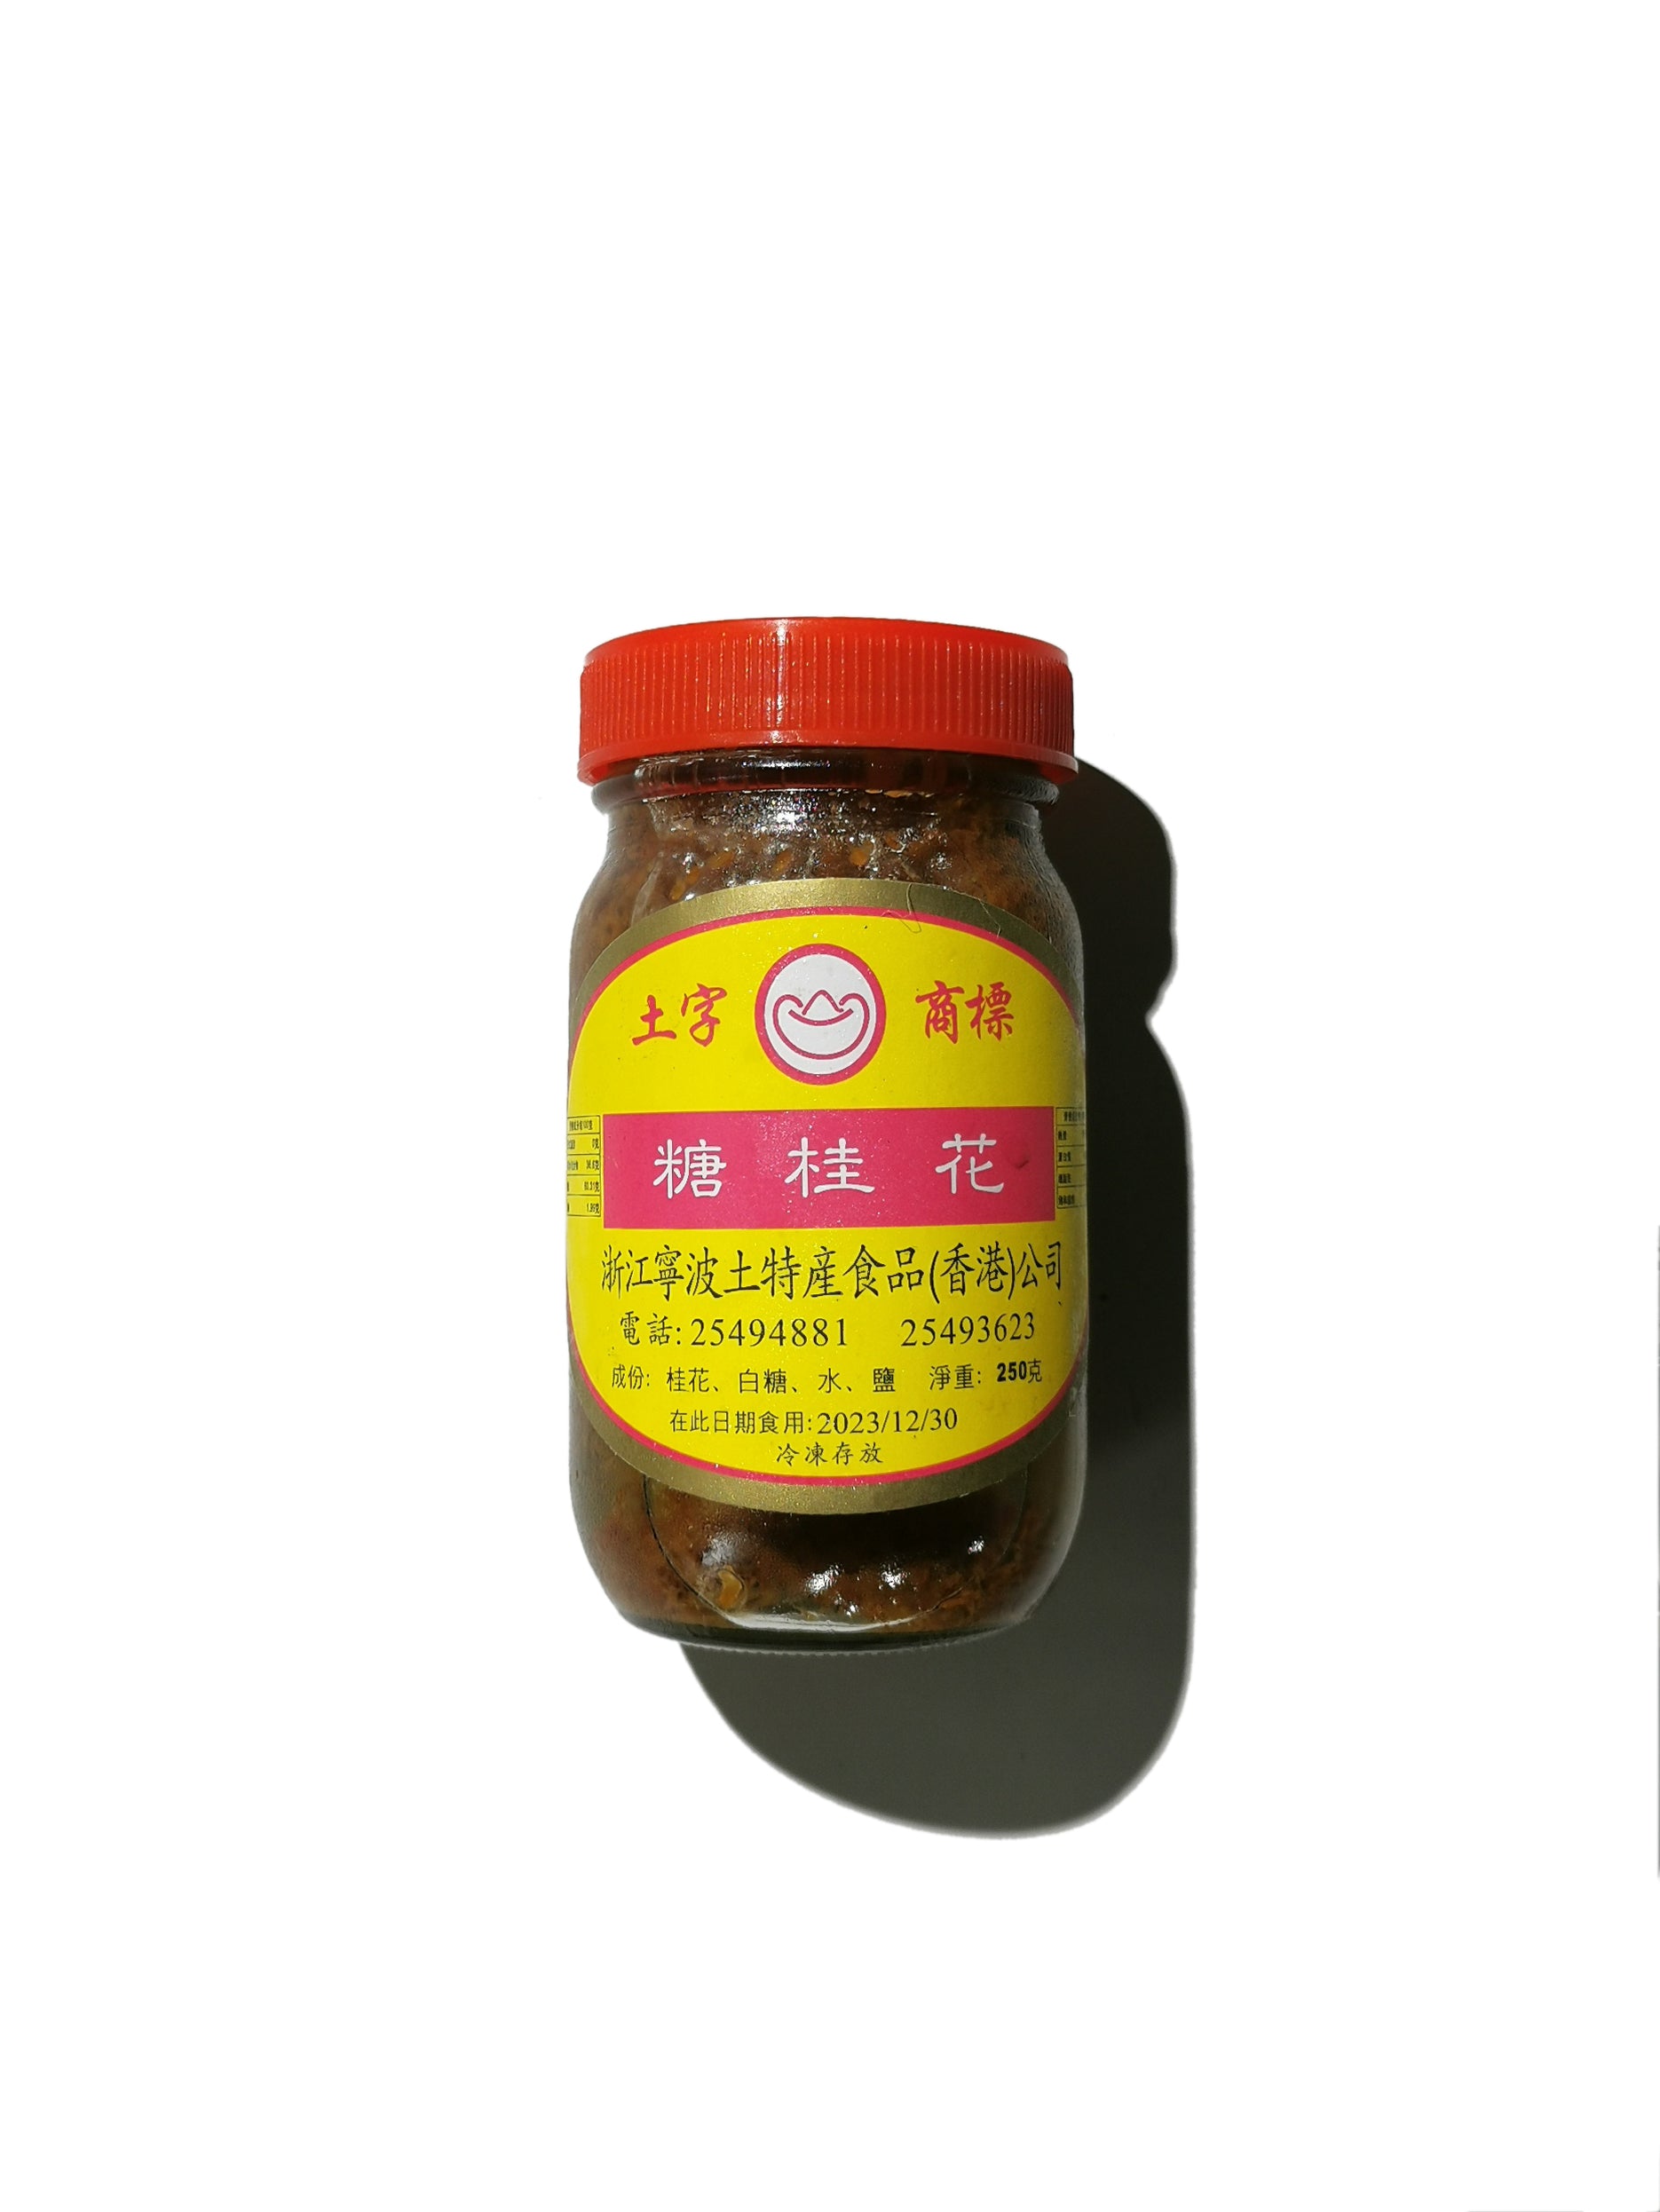 Osmanthus Sugar 桂花糖醬 - 250g